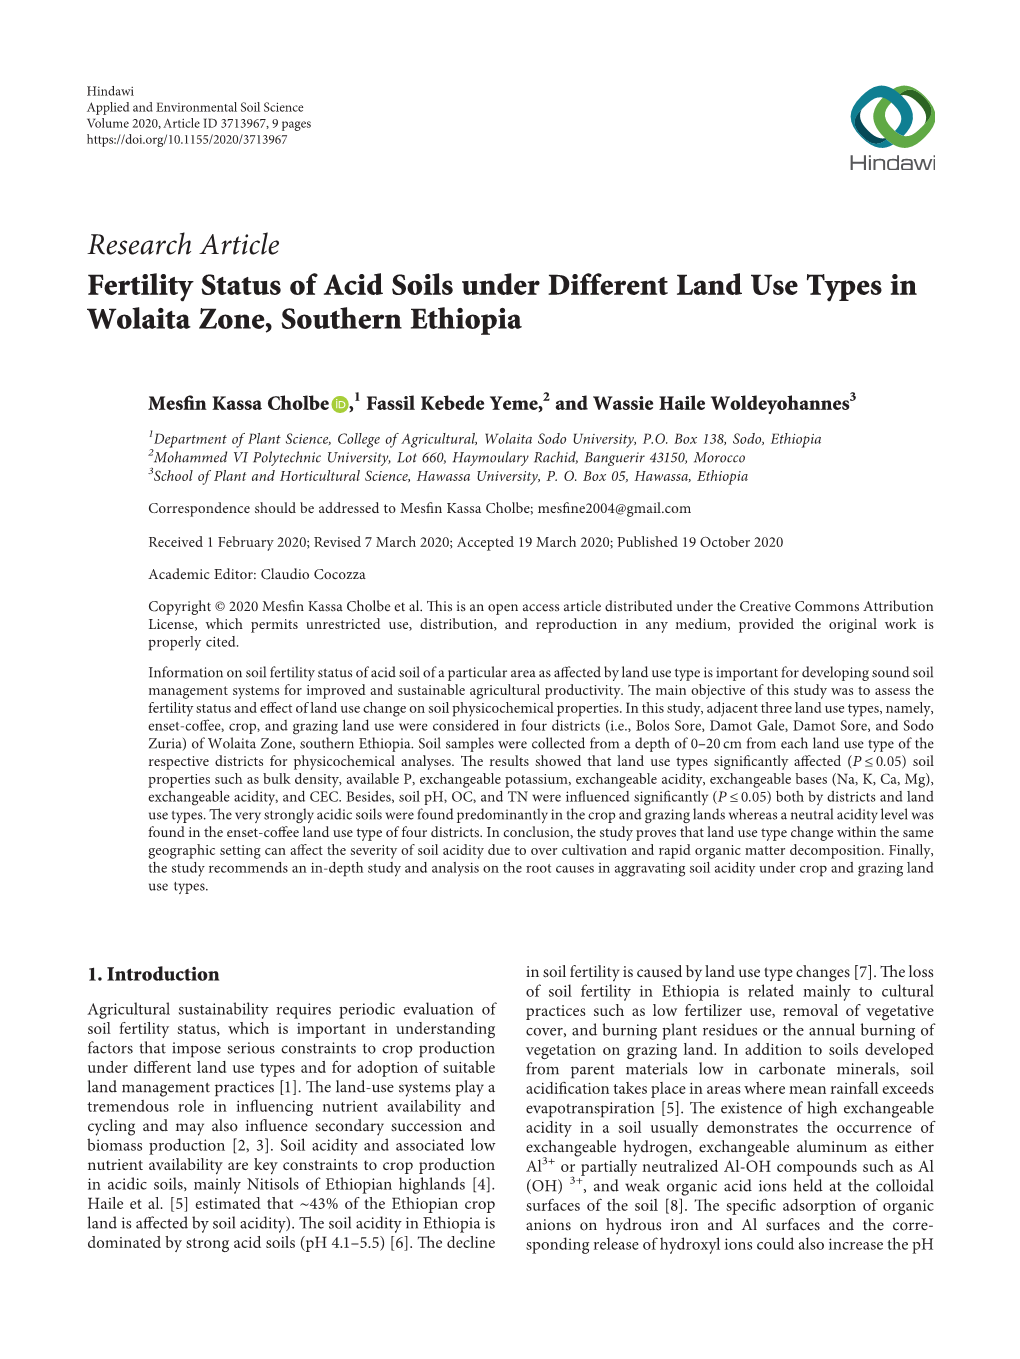 Fertility Status of Acid Soils Under Different Land Use Types in Wolaita Zone, Southern Ethiopia